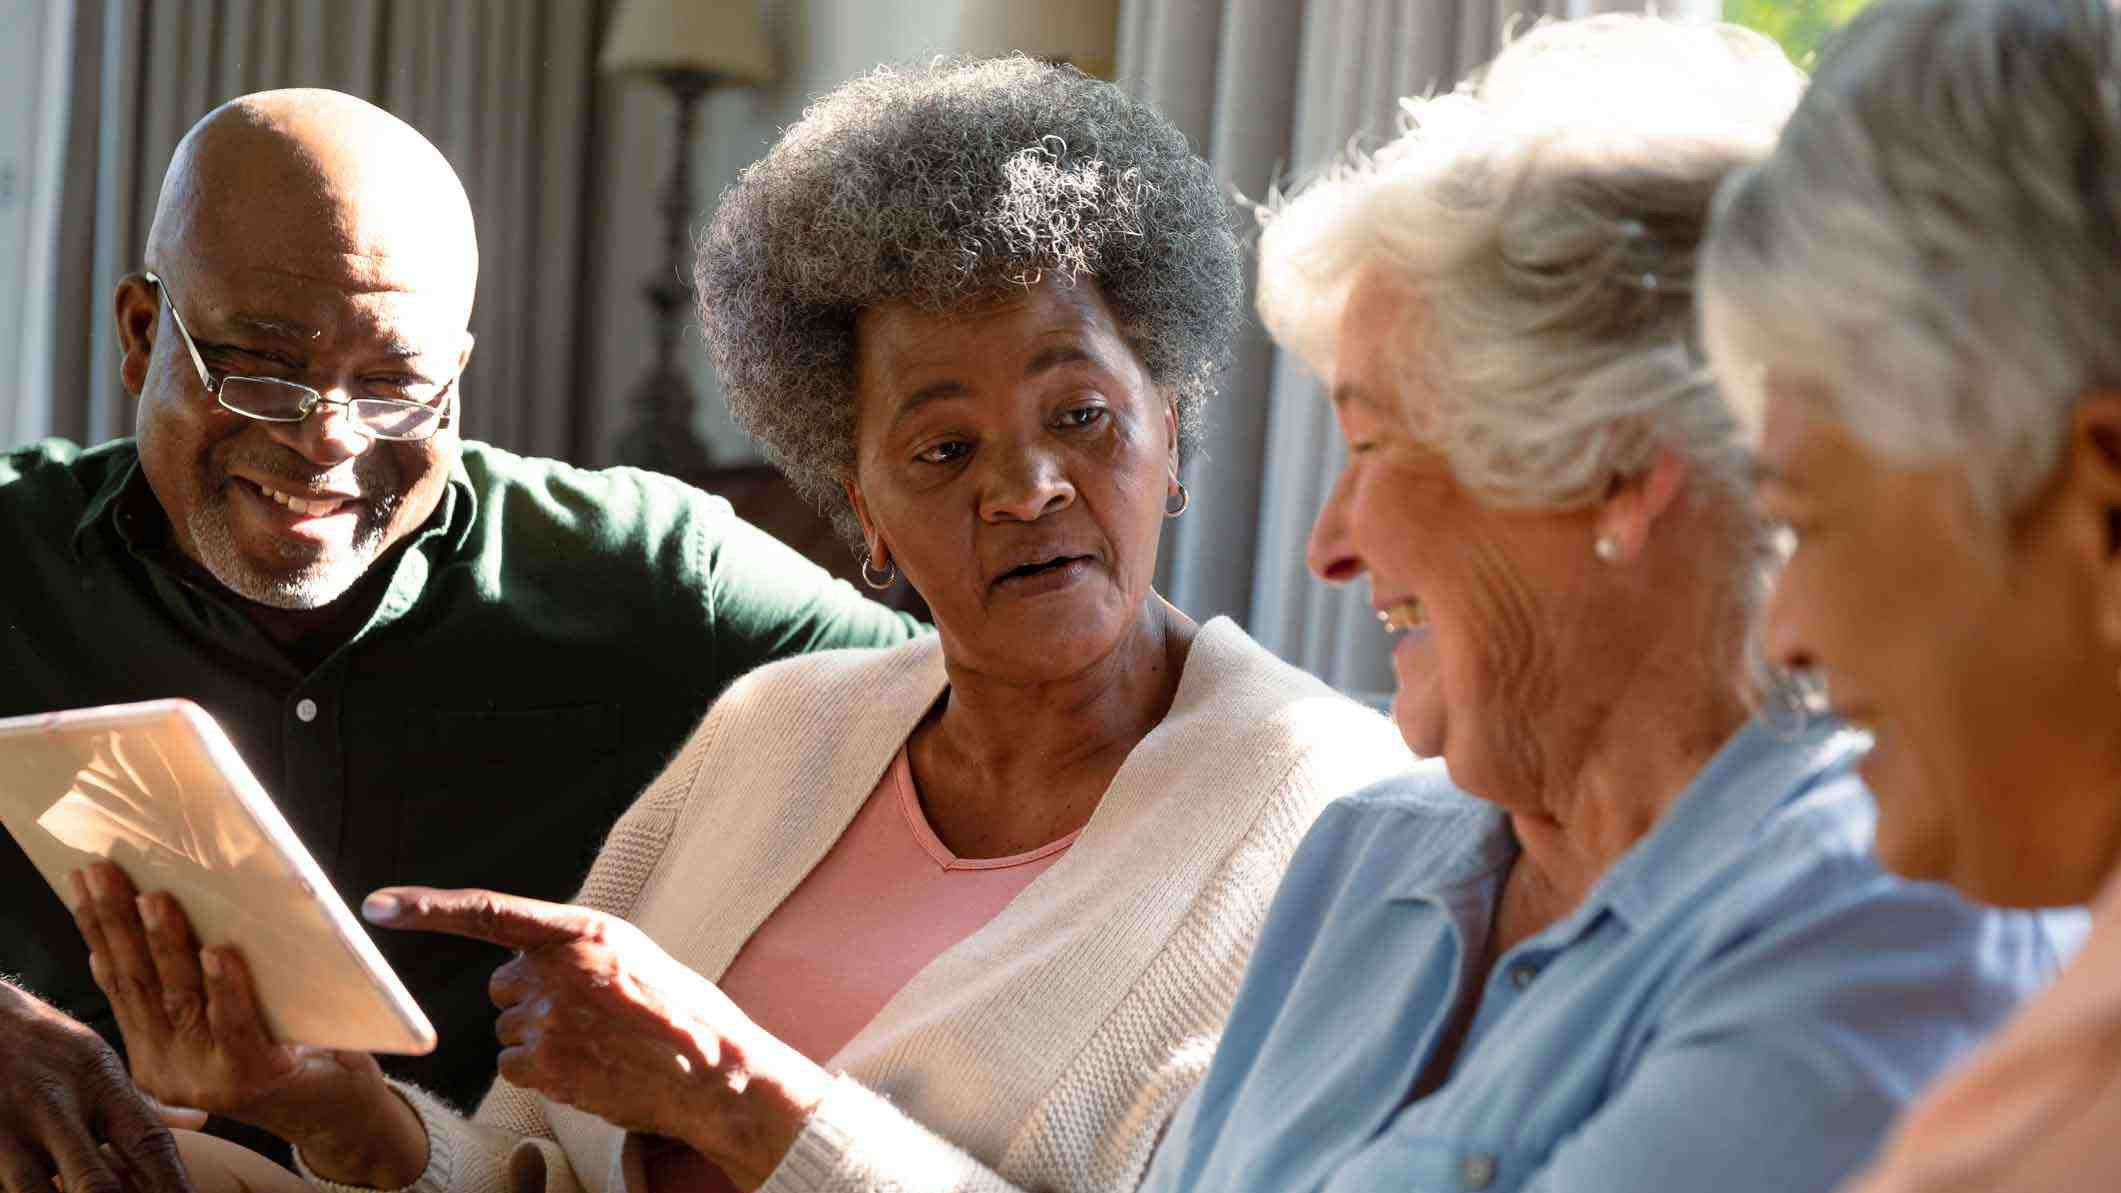 Group of seniors enjoy conversation